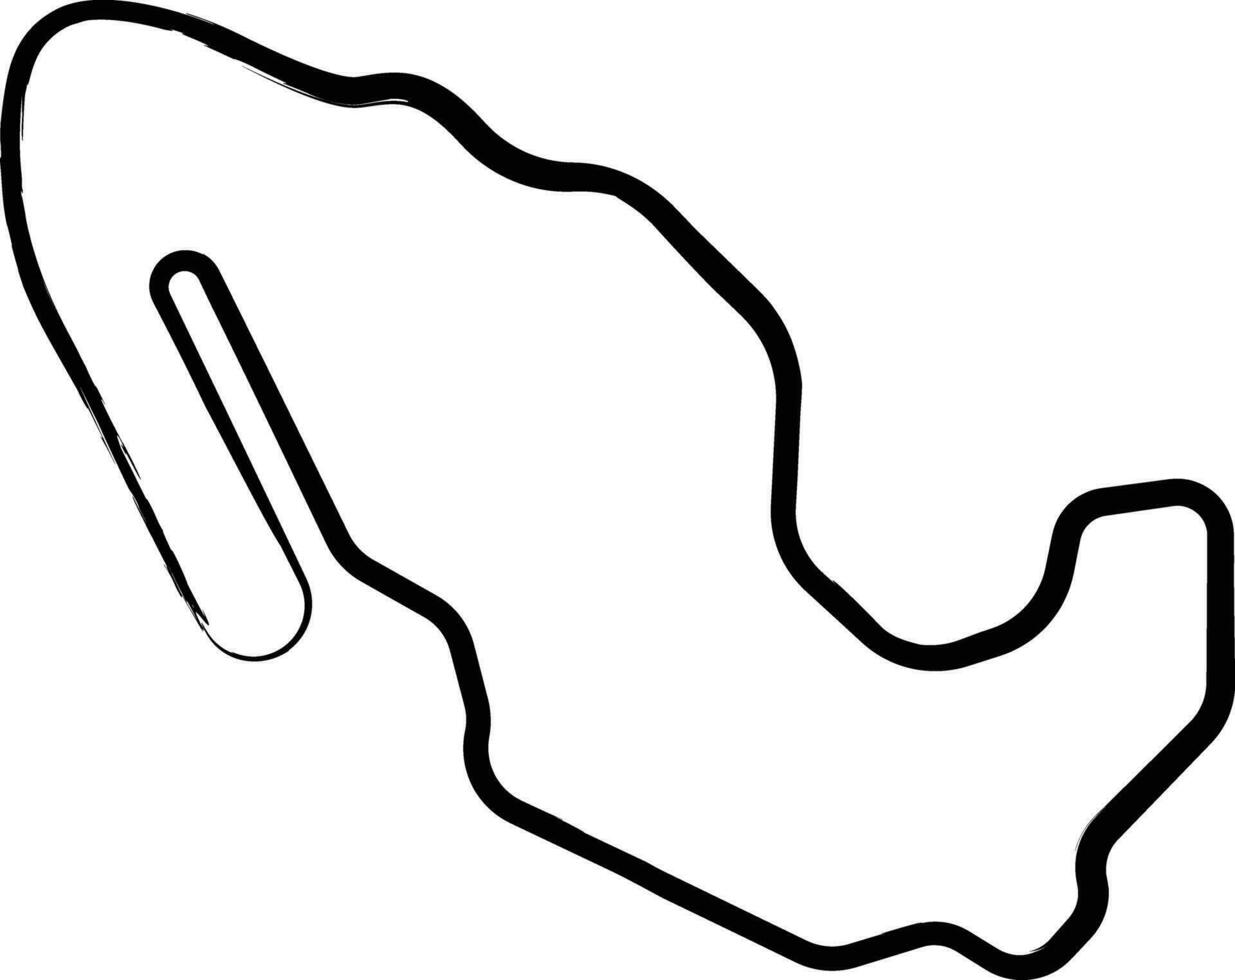 Mexico Map hand drawn vector illustration